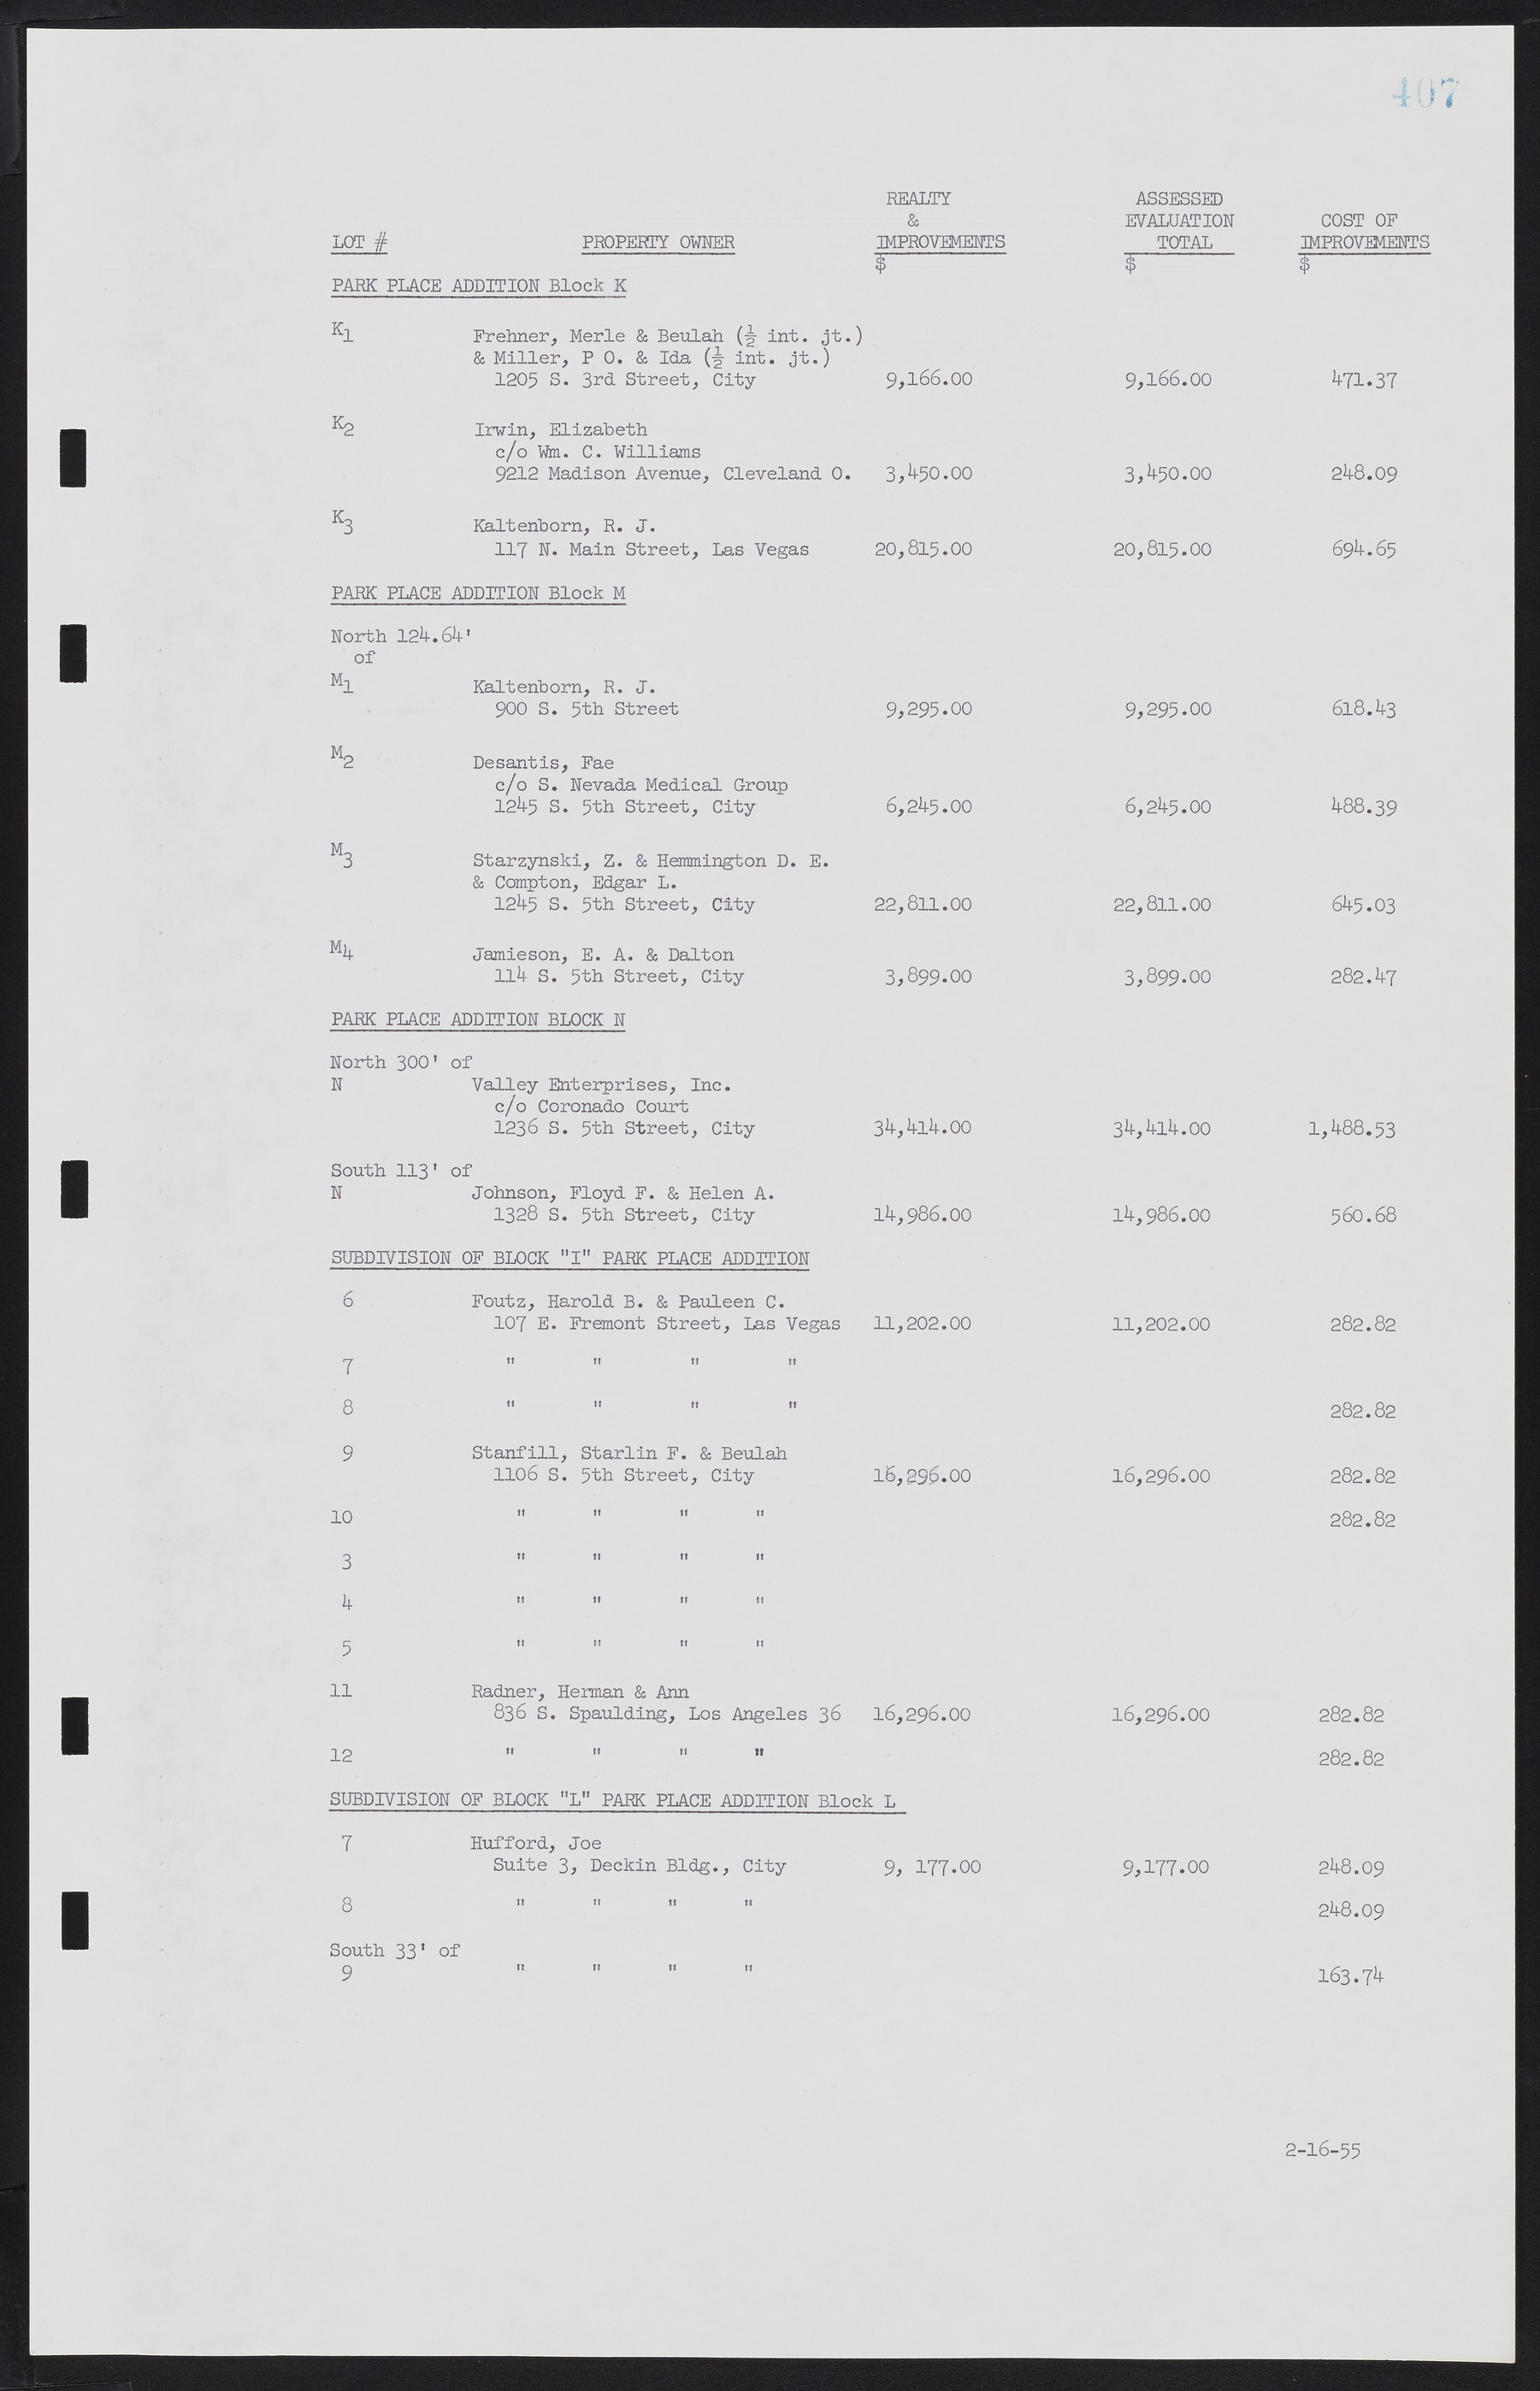 Las Vegas City Commission Minutes, February 17, 1954 to September 21, 1955, lvc000009-413